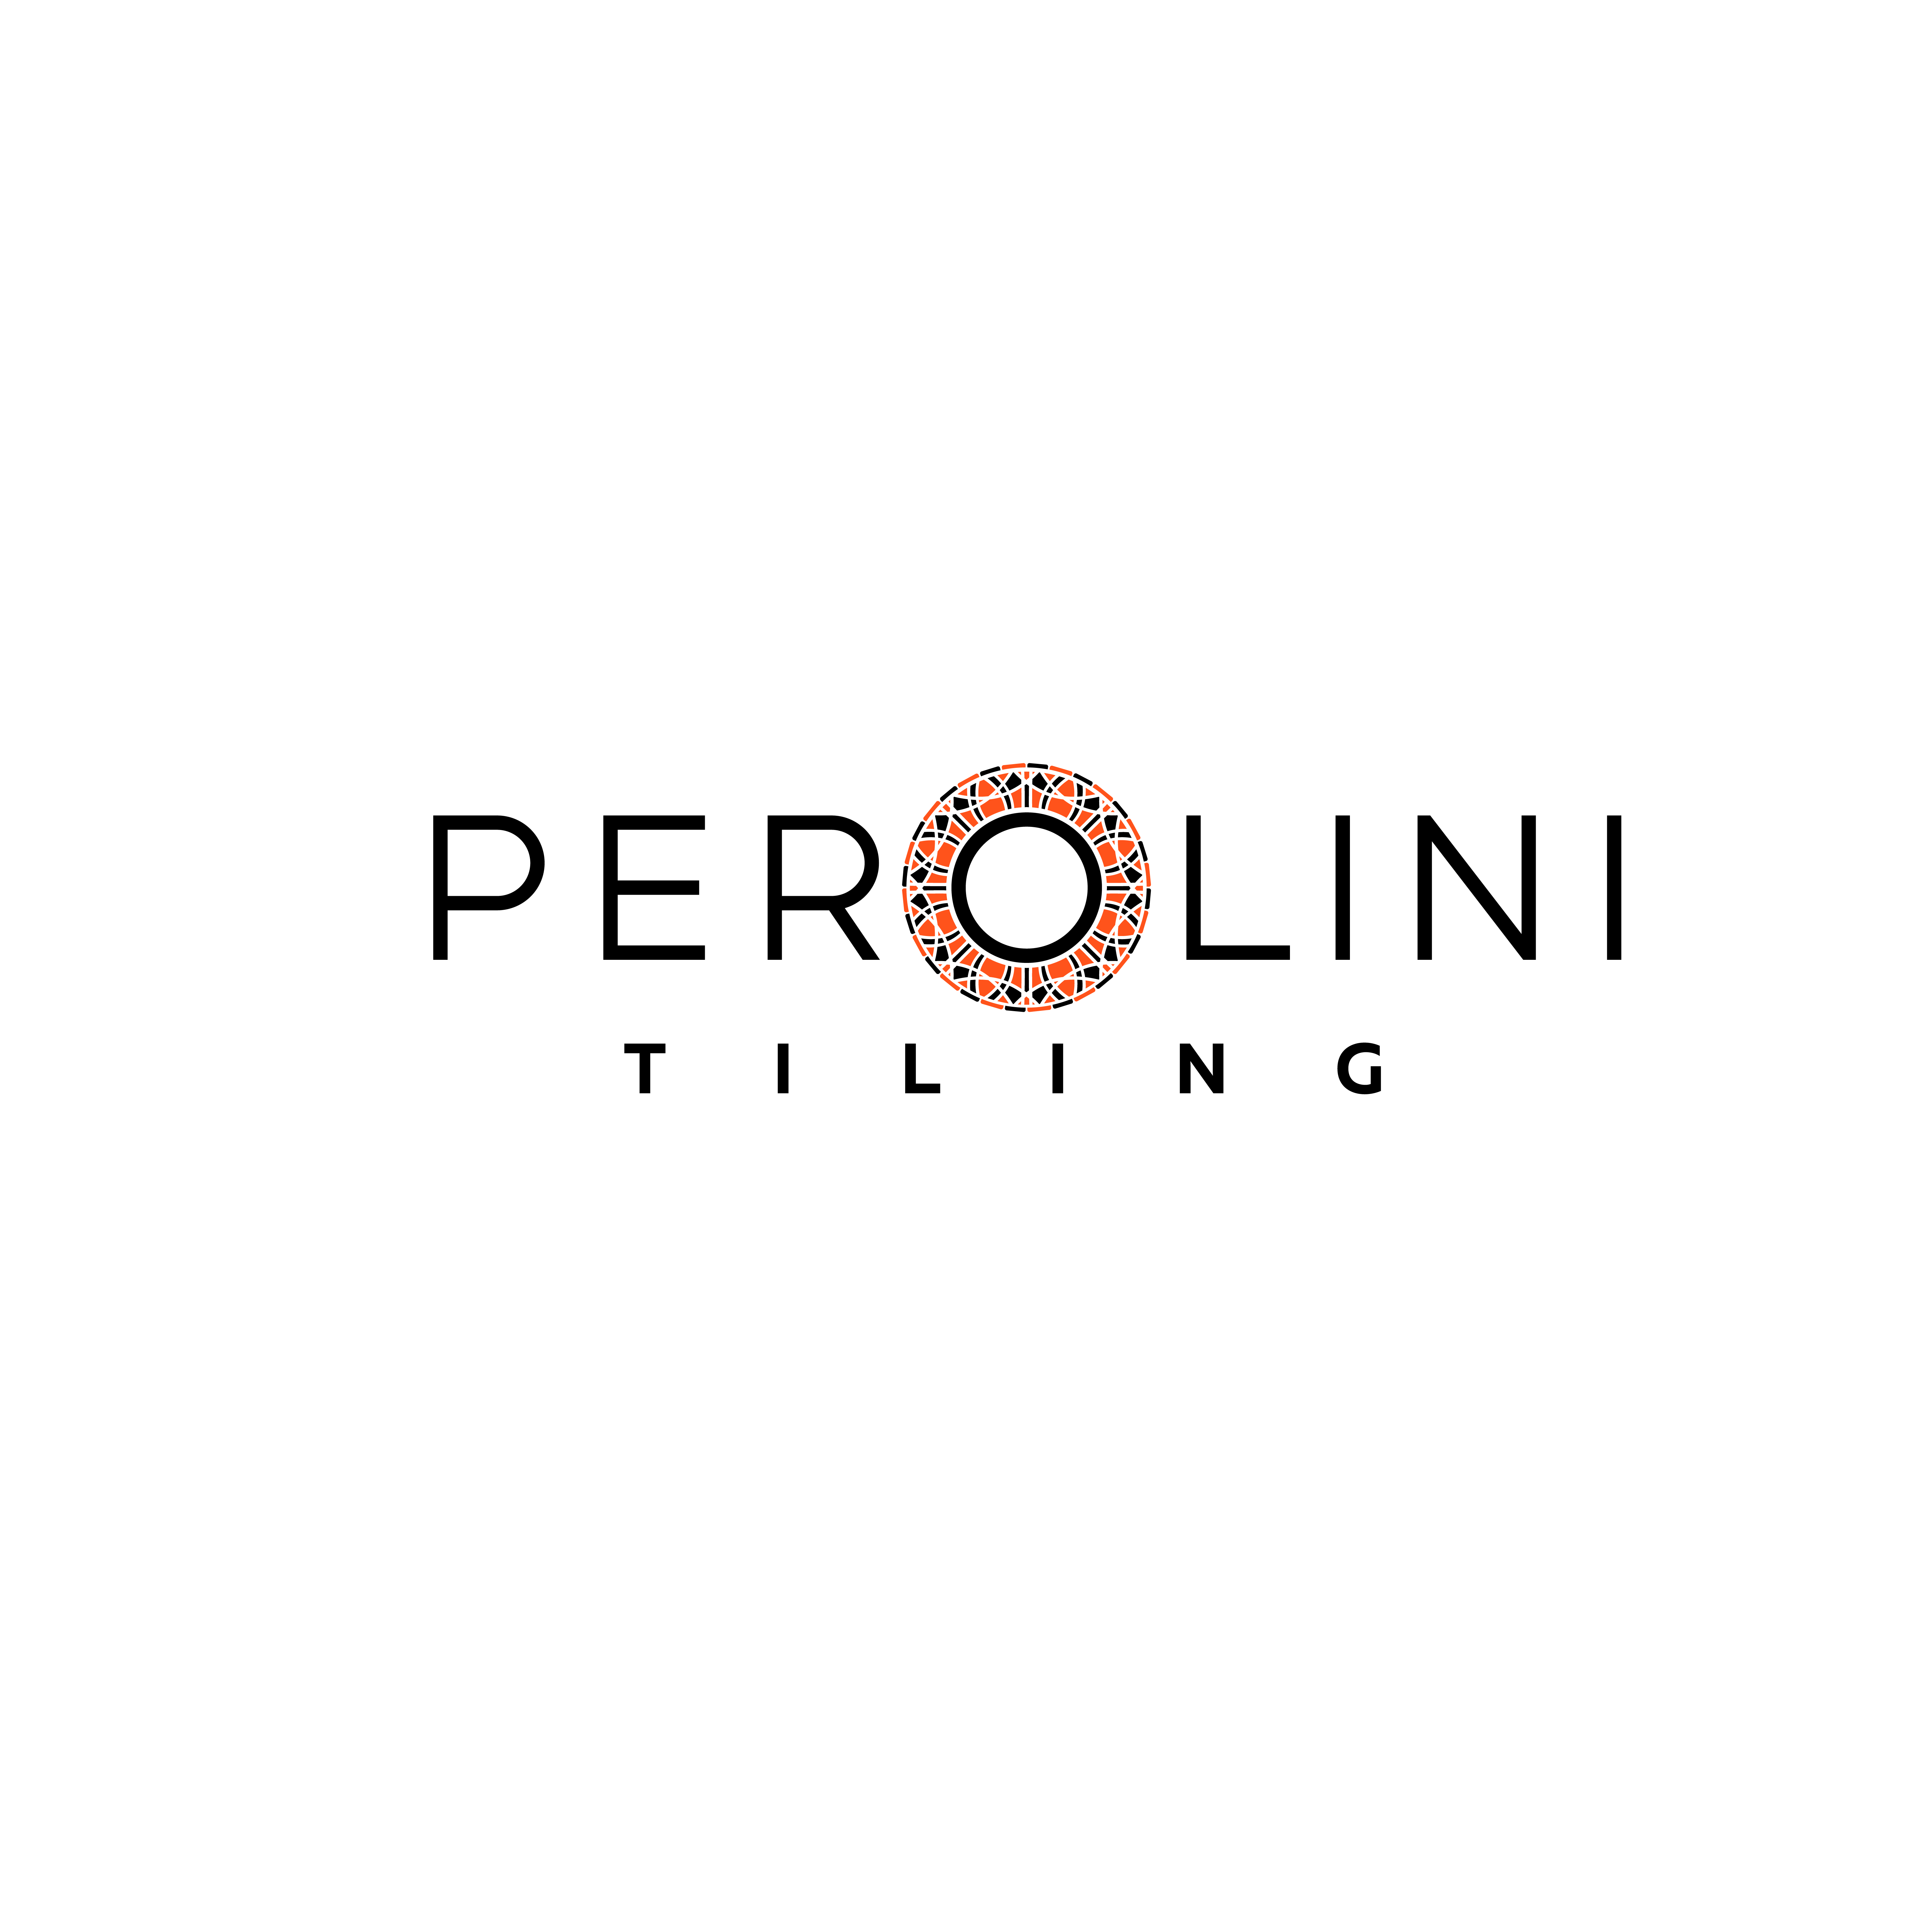 Perolini Tiling